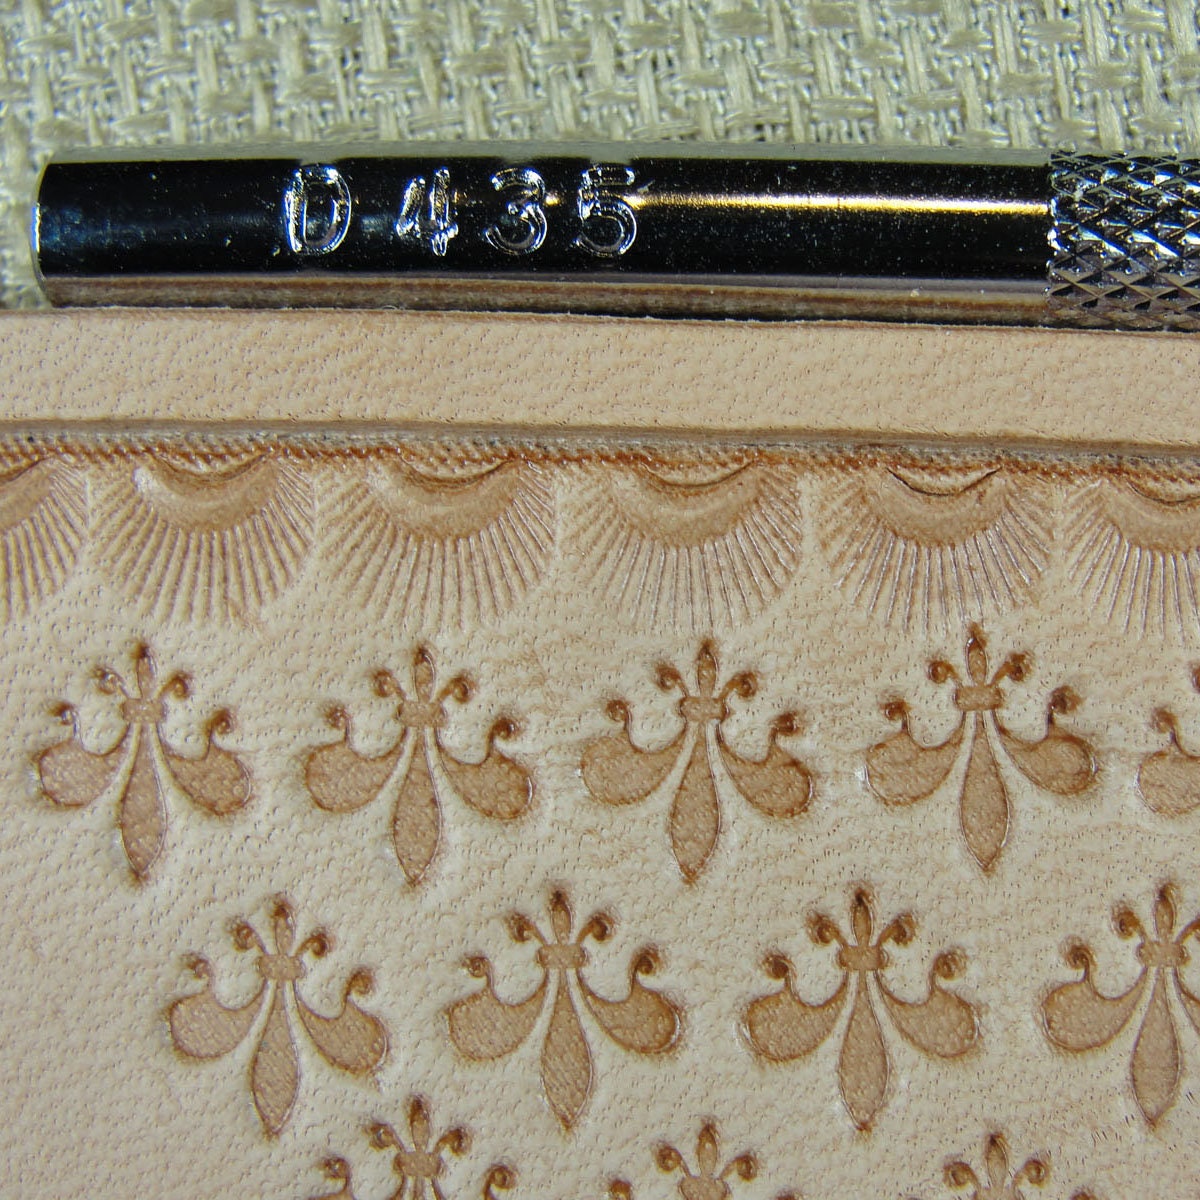 Steel Craft Japan Undercut Beveler Stamp Set 3 Leather Stamping Tools 